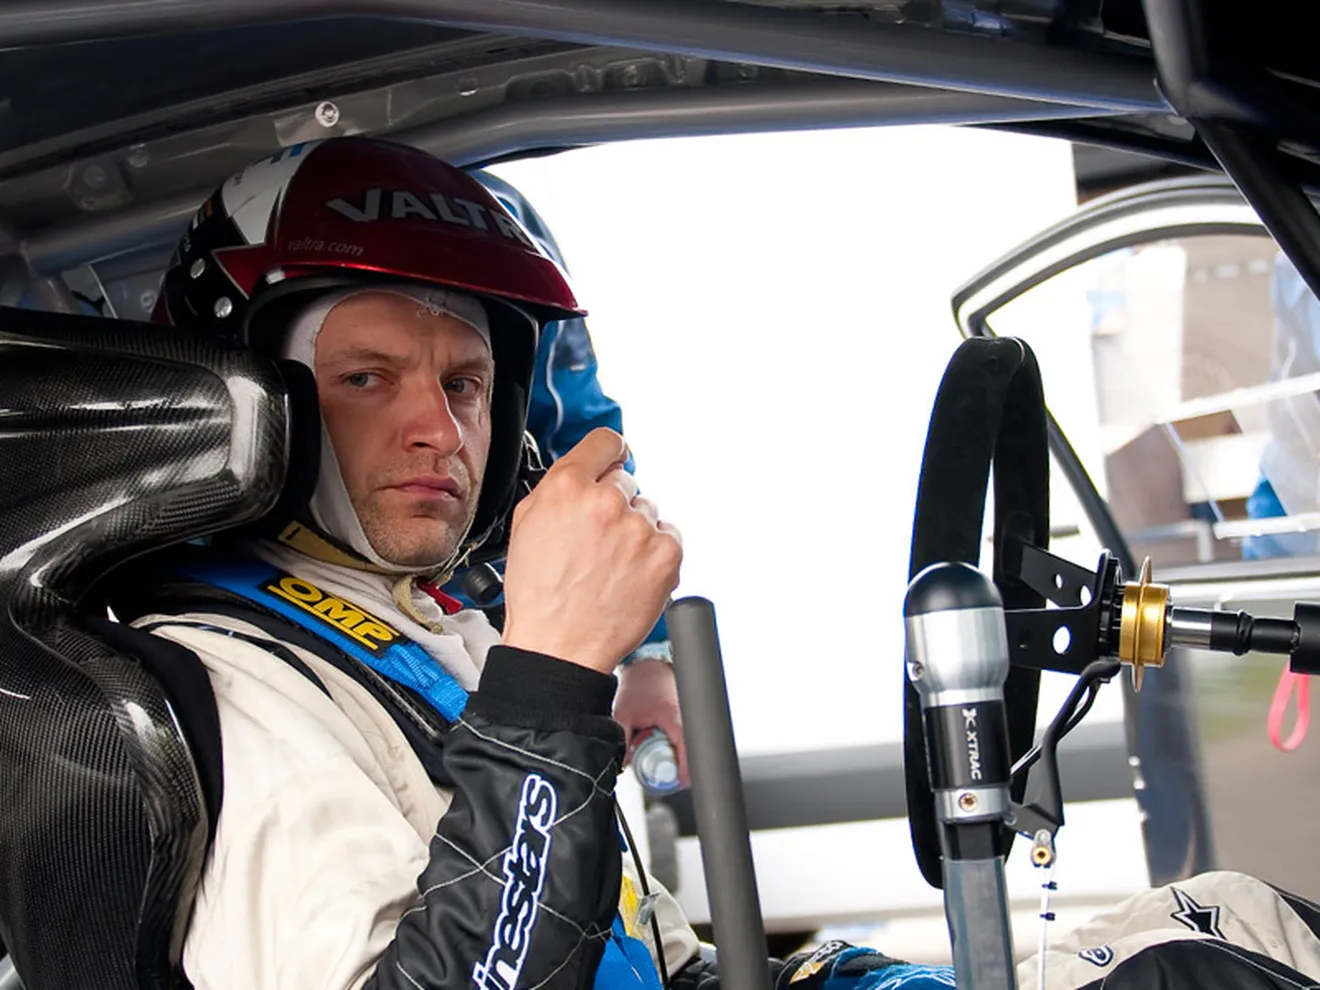 Juho Hänninen, piloto de pruebas de Toyota en el WRC